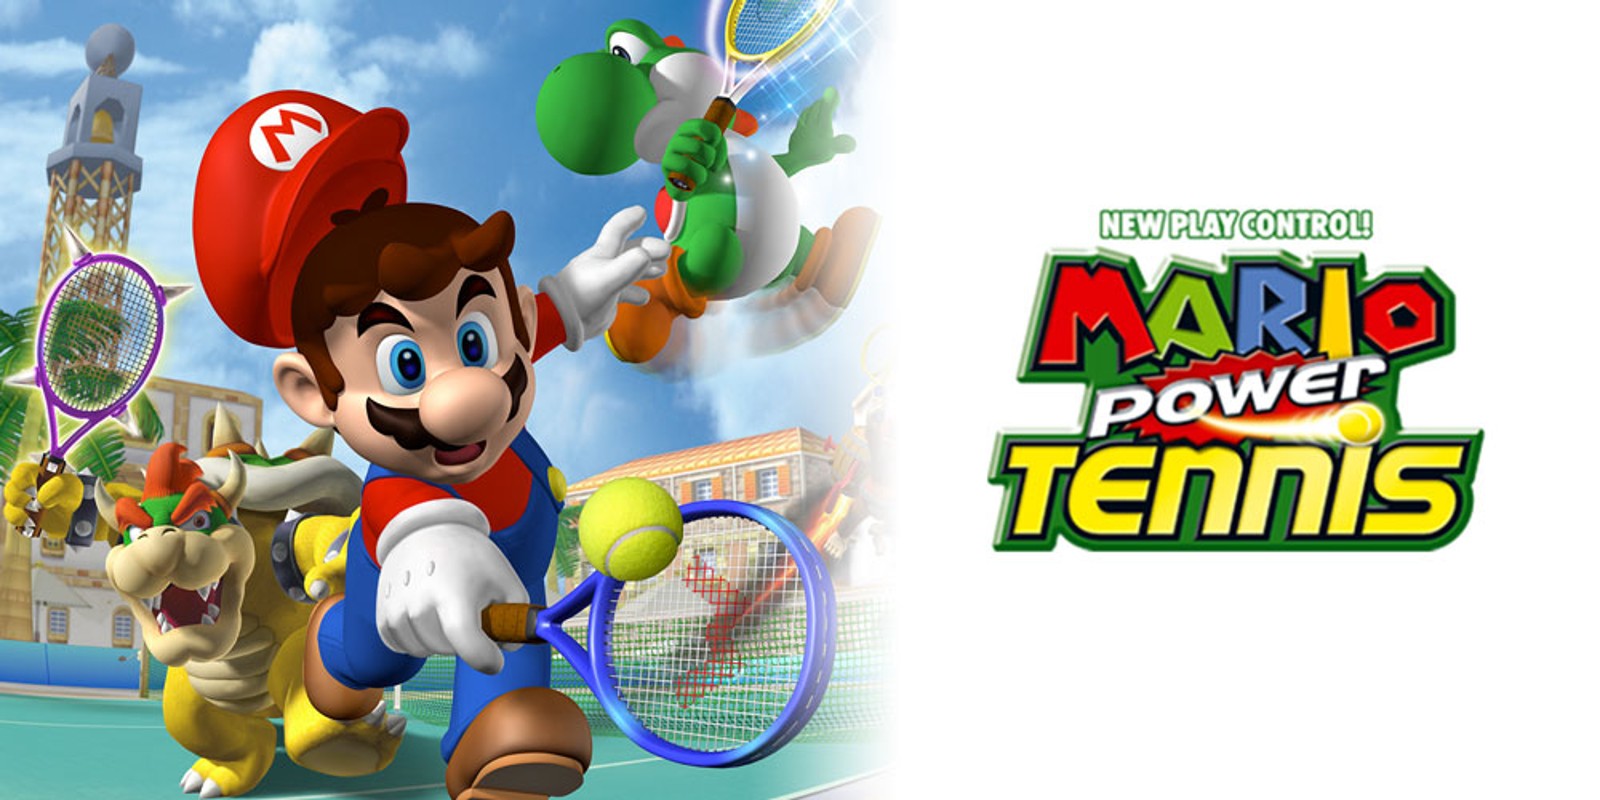 New Play Control Mario Power Tennis Wii Spiele Nintendo